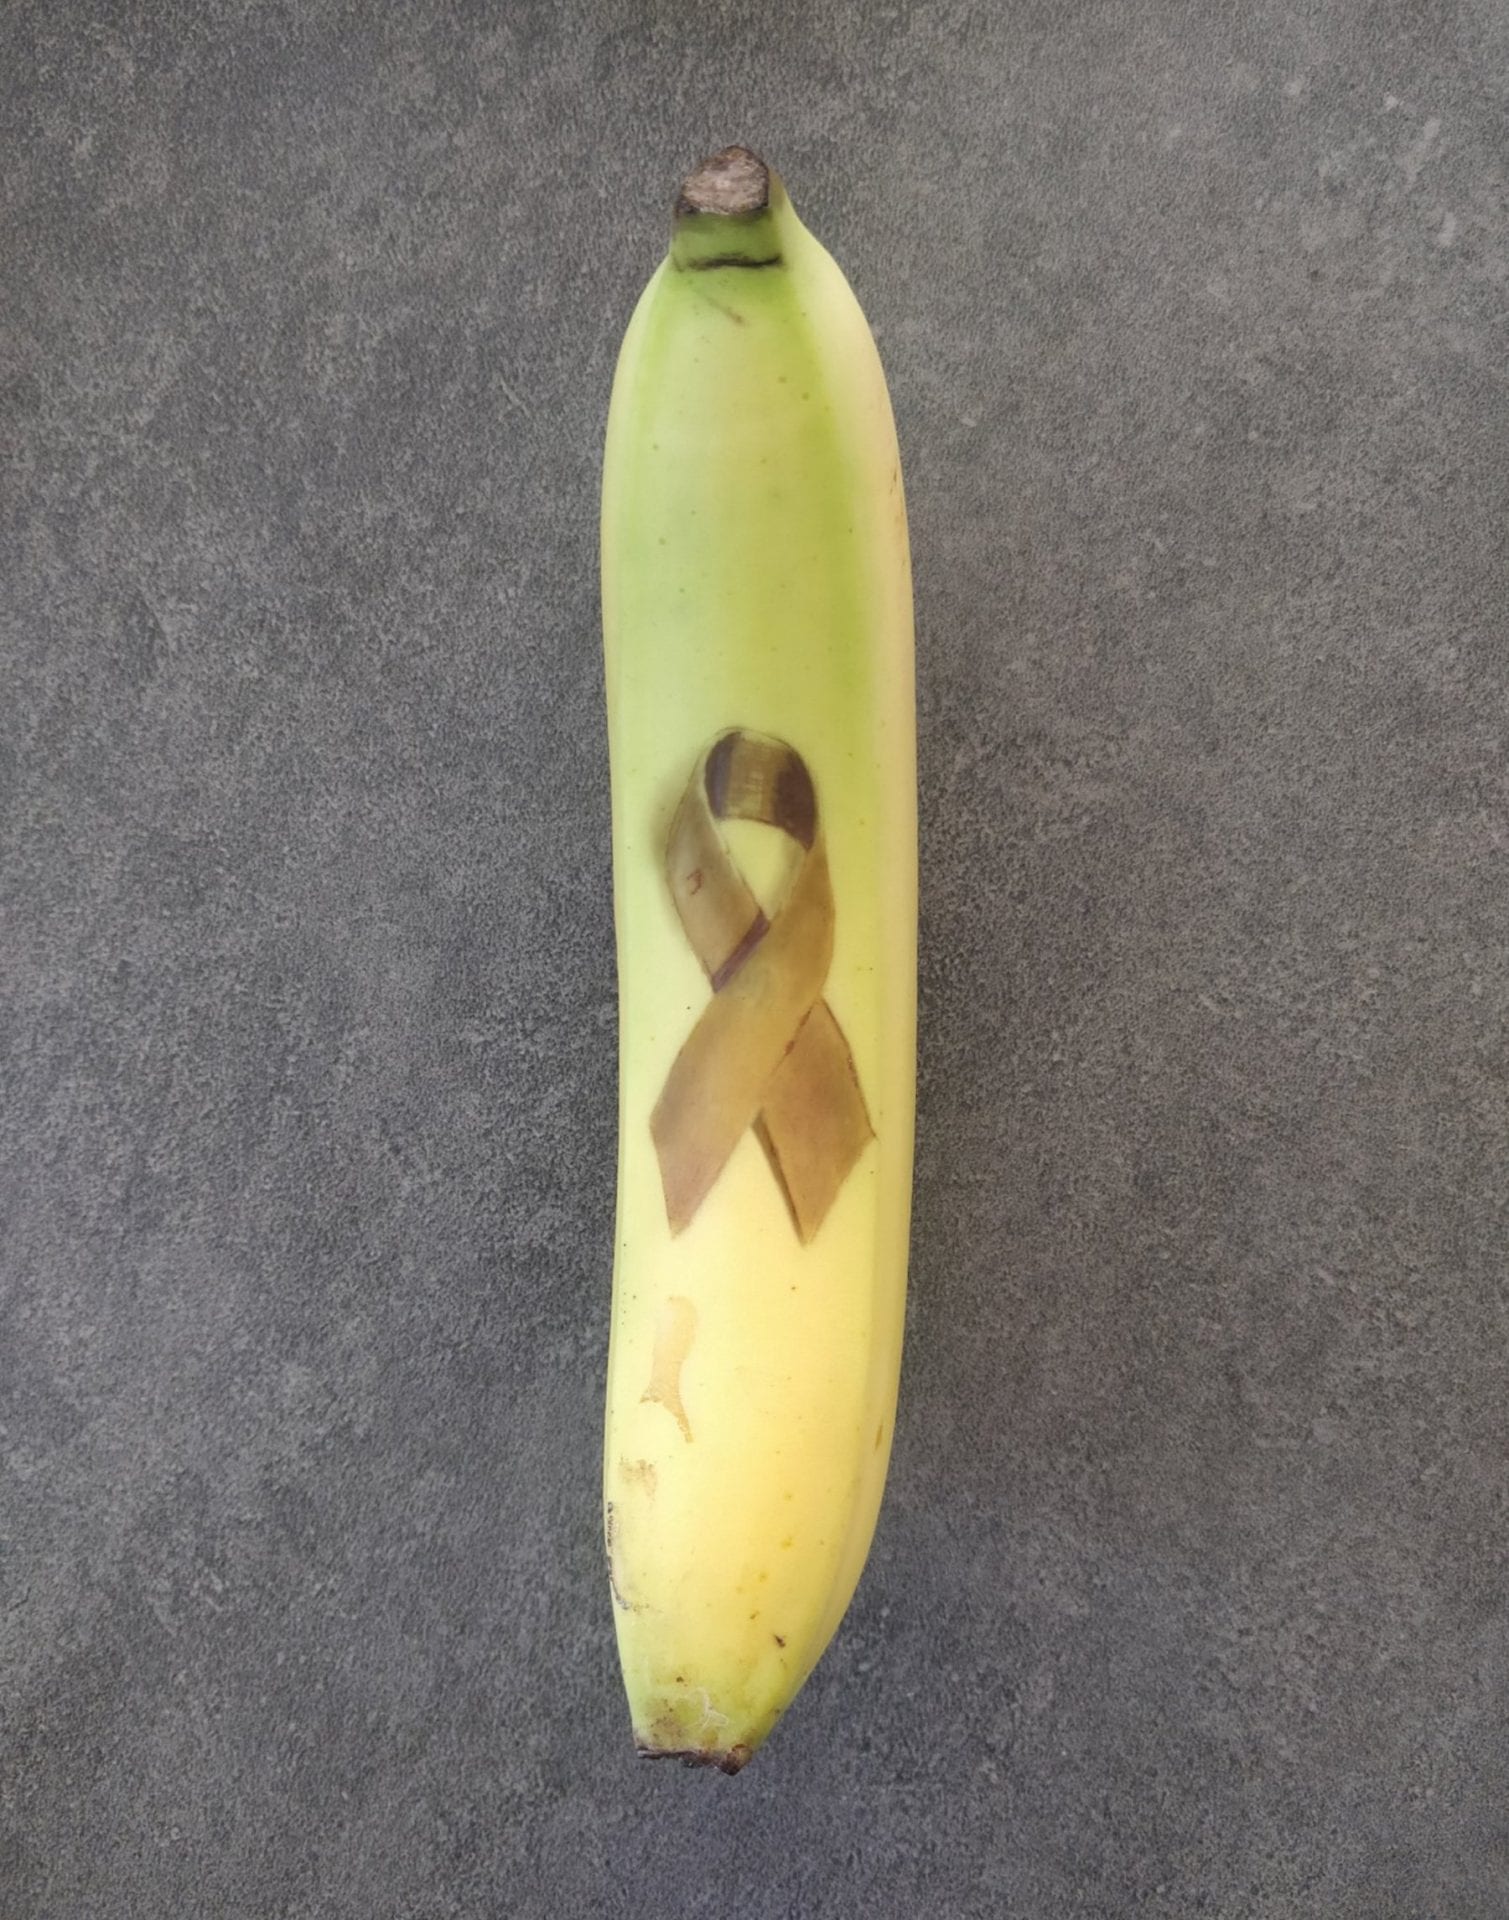 L'artiste Anna Chojnicka dessine sur des bananes sans utiliser d'encre